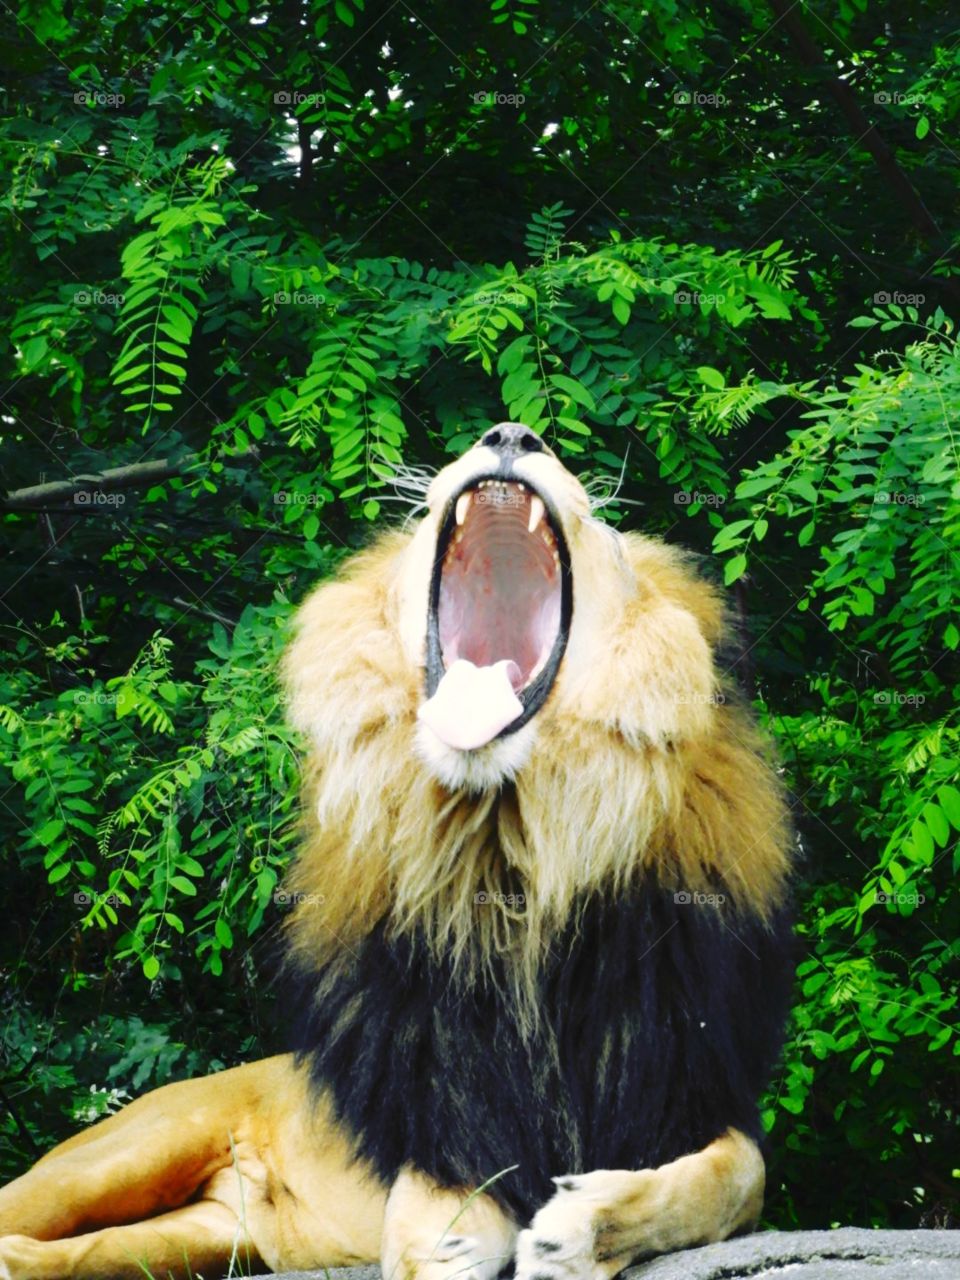 lion yawning mouth open